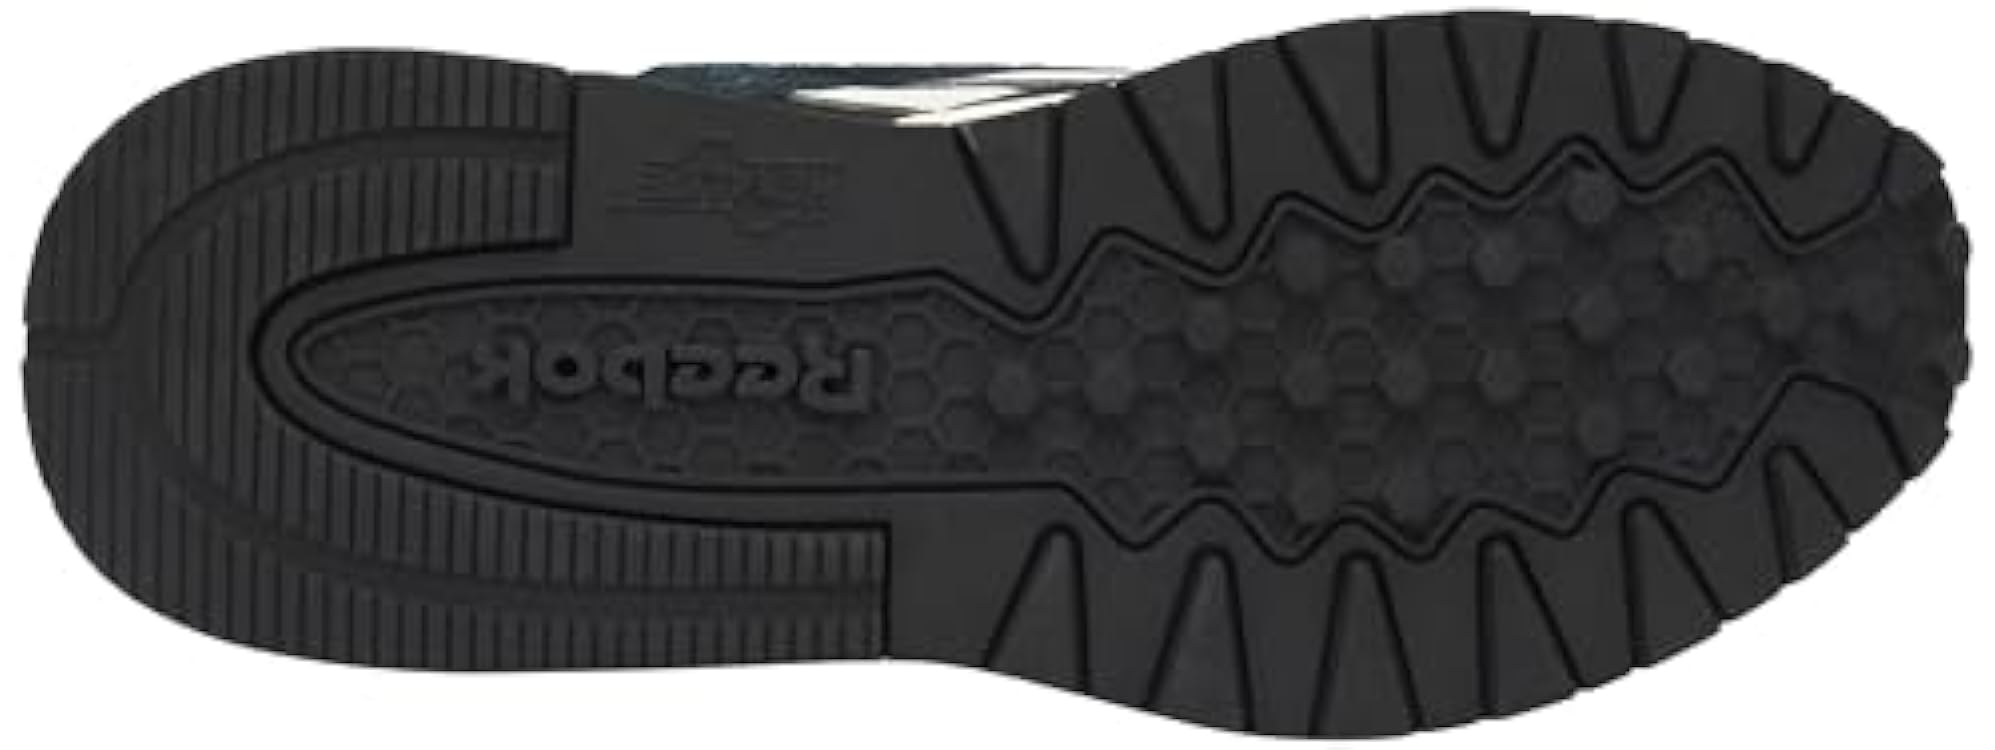 Reebok Classic Leather Hexalite, Sneaker Unisex-Adulto 470161745